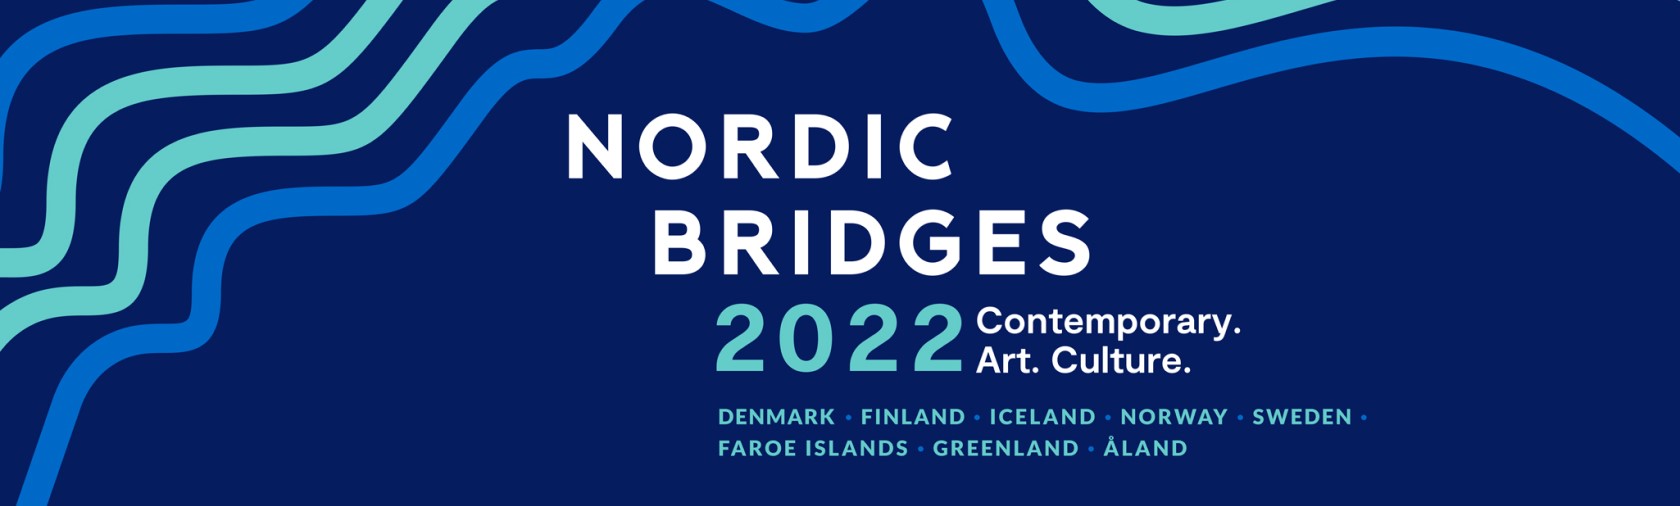 Nordic Bridges 2022 banner. Contemporary. Art. Culture. Denmark - Finland - Iceland - Norway - Faroe Islands - Greenland - Aland